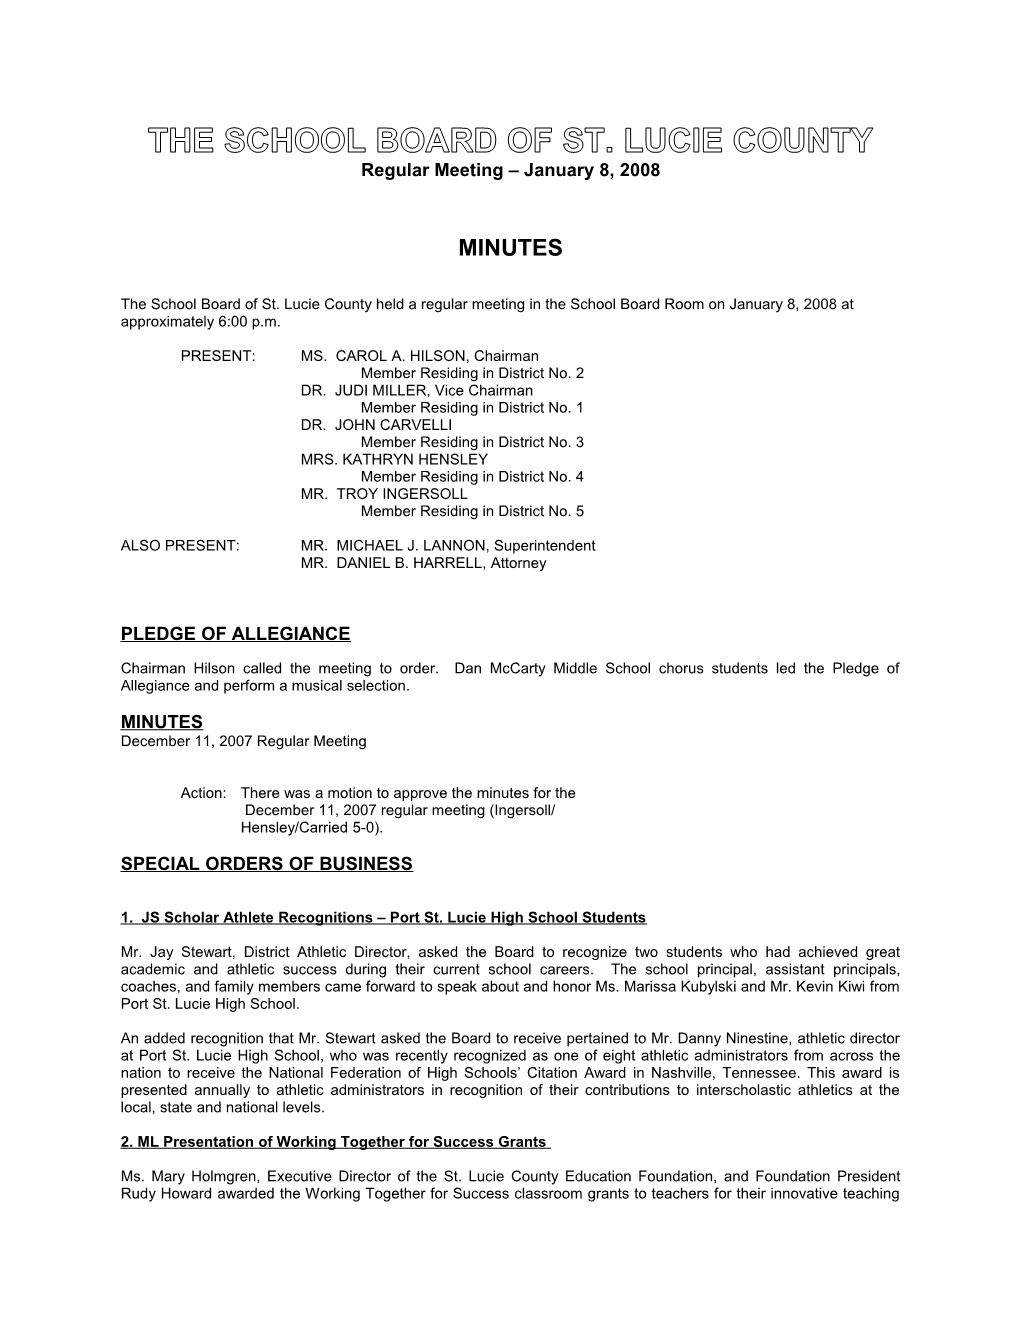 01-08-08 SLCSB Regular Meeting Minutes